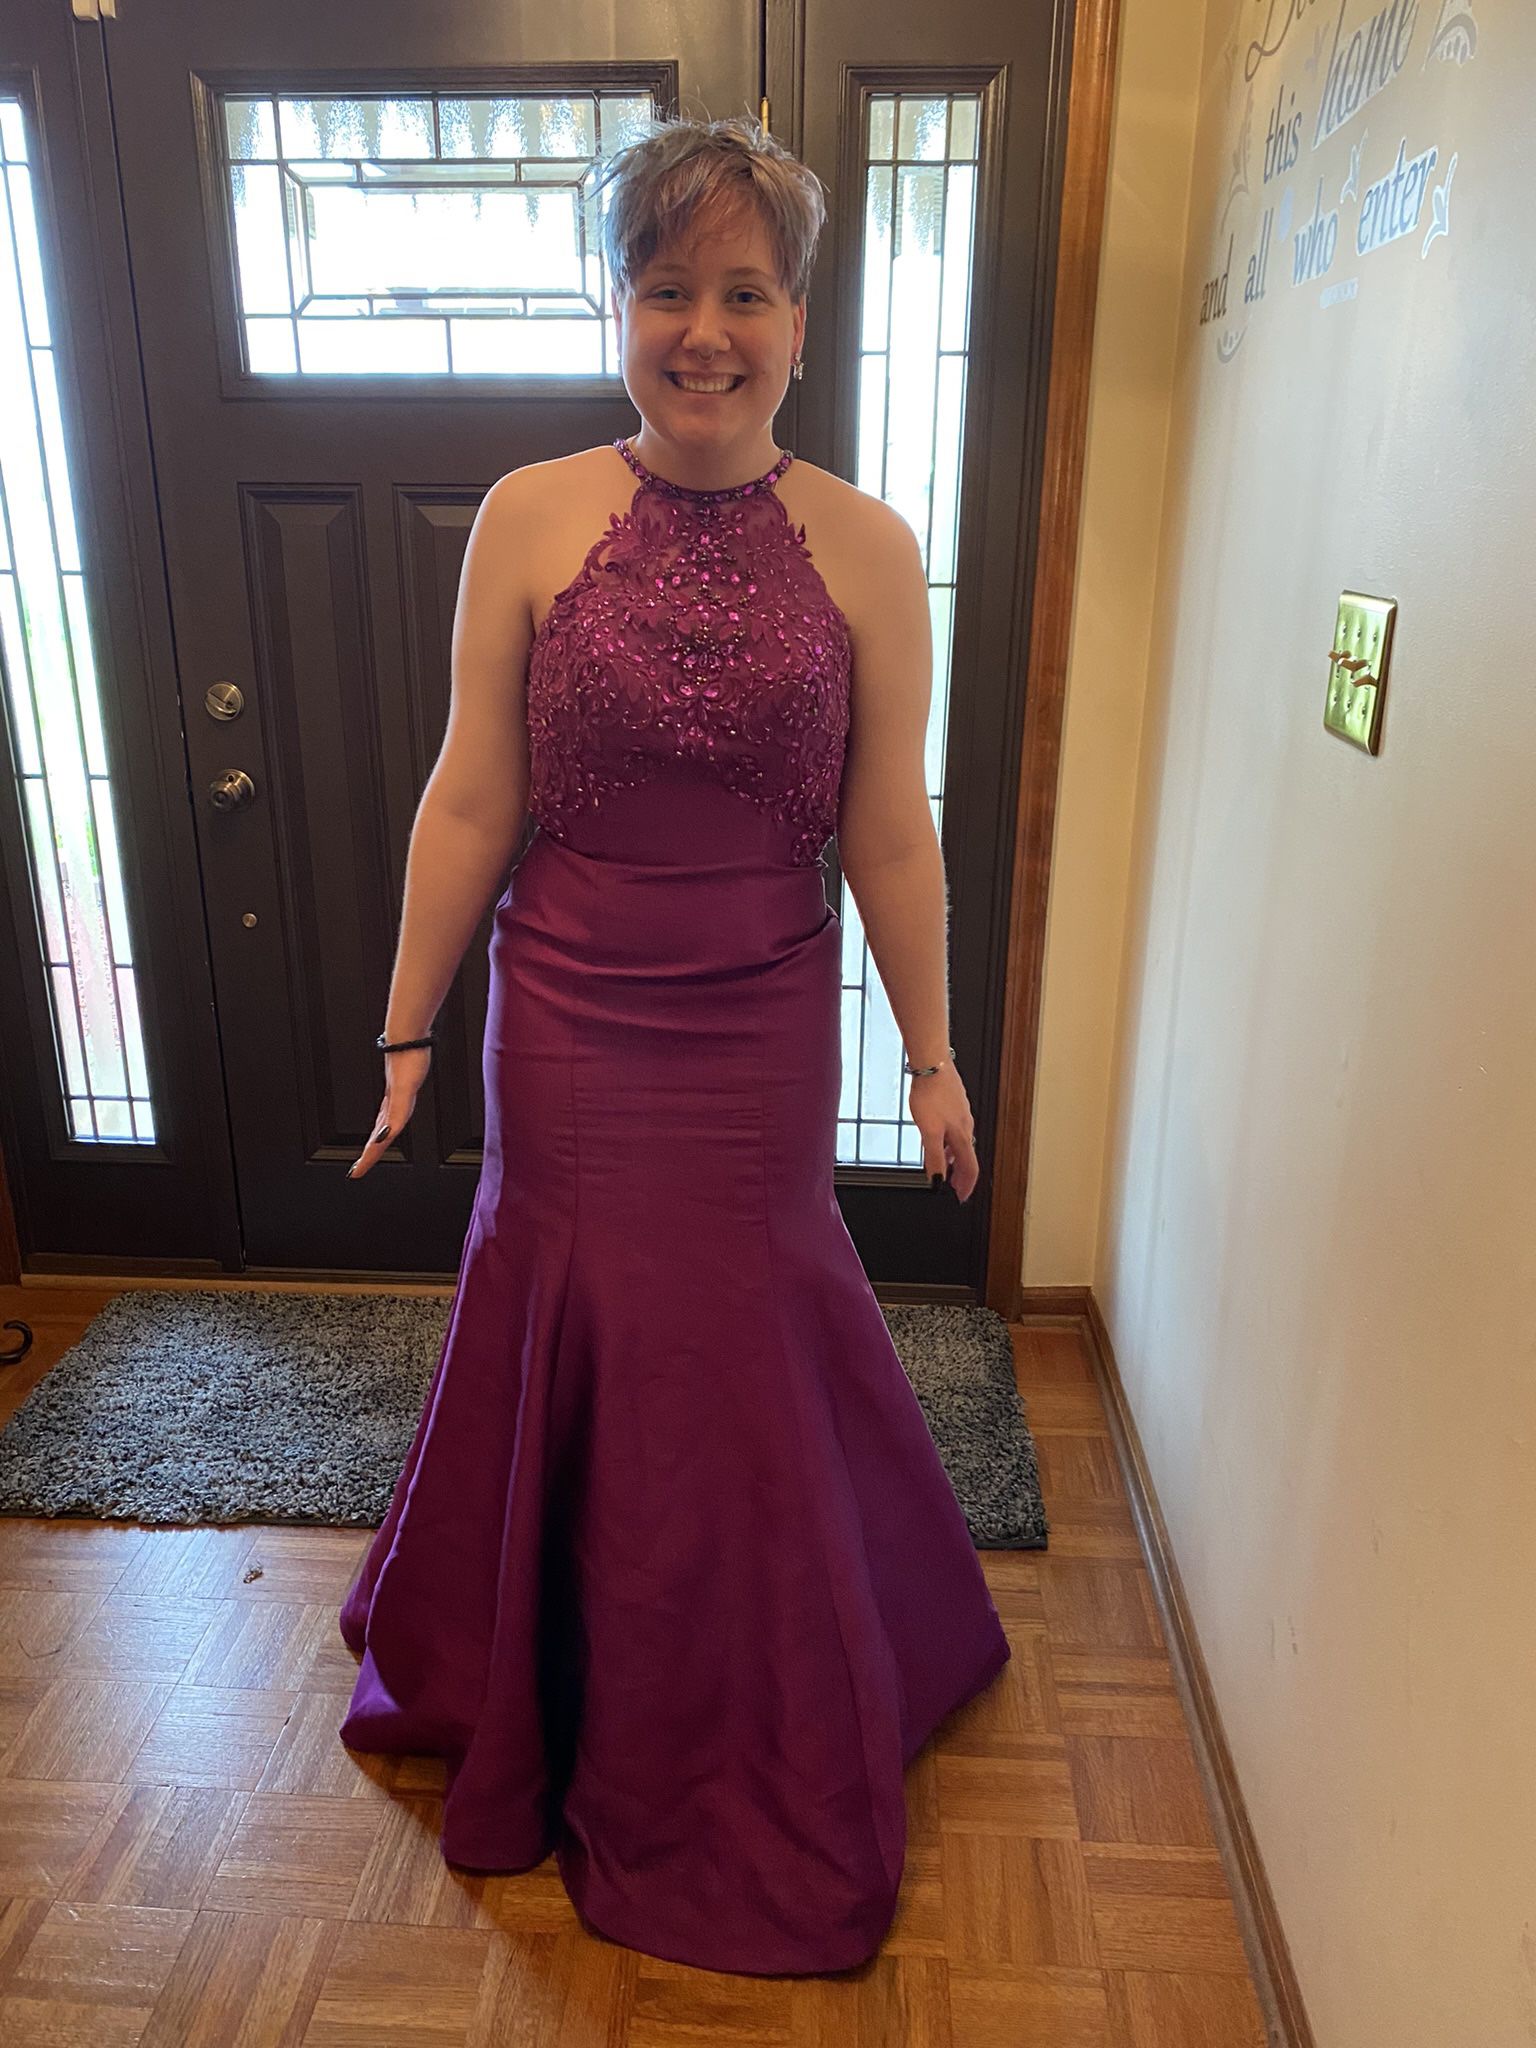 Beautiful Purple Beaded And Silk Prom Dress Size 5/6